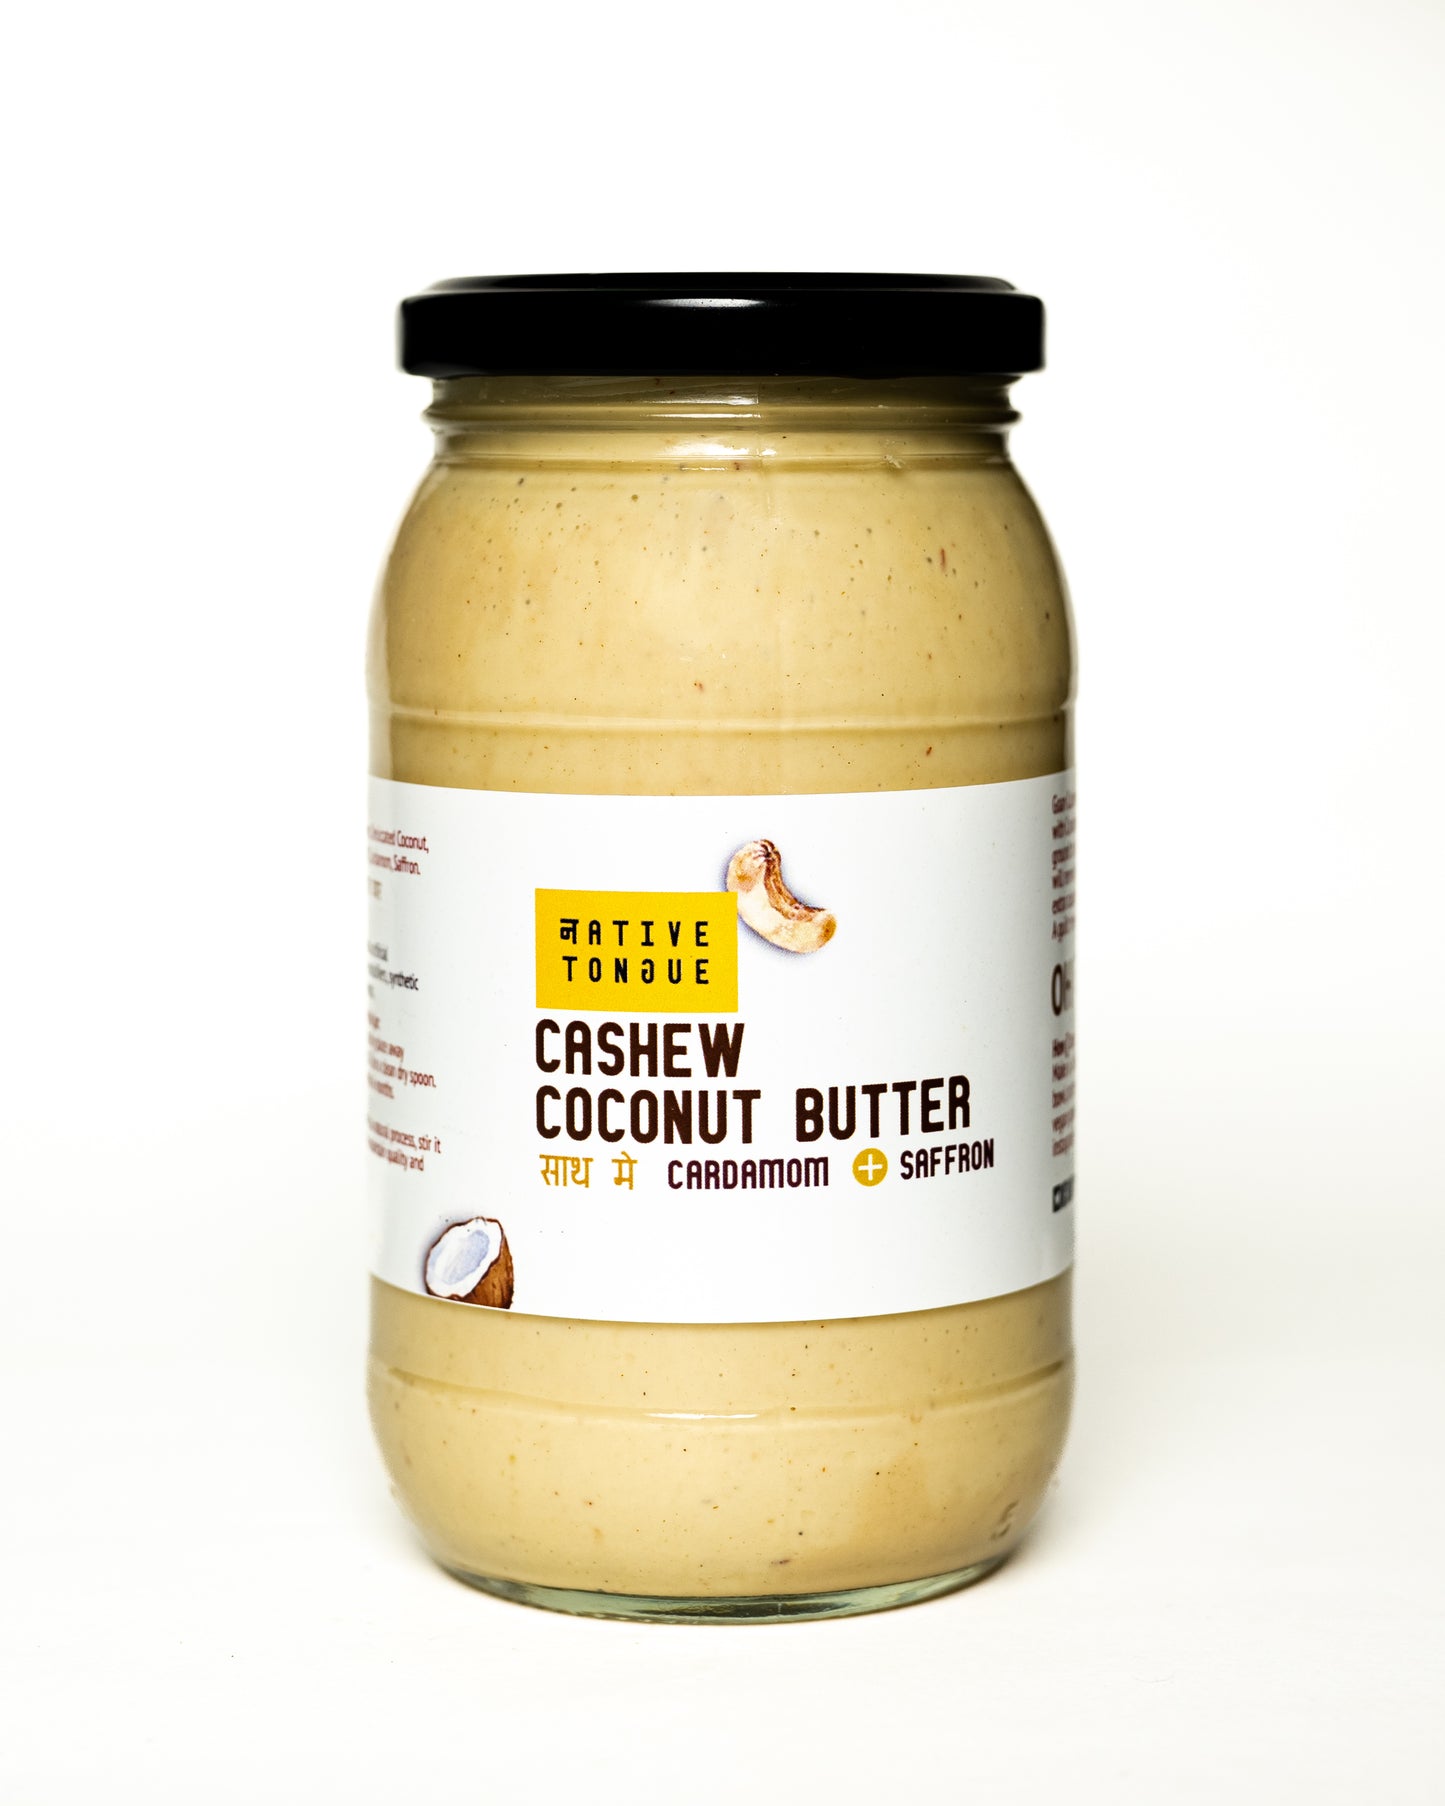 Cashew Coconut Butter